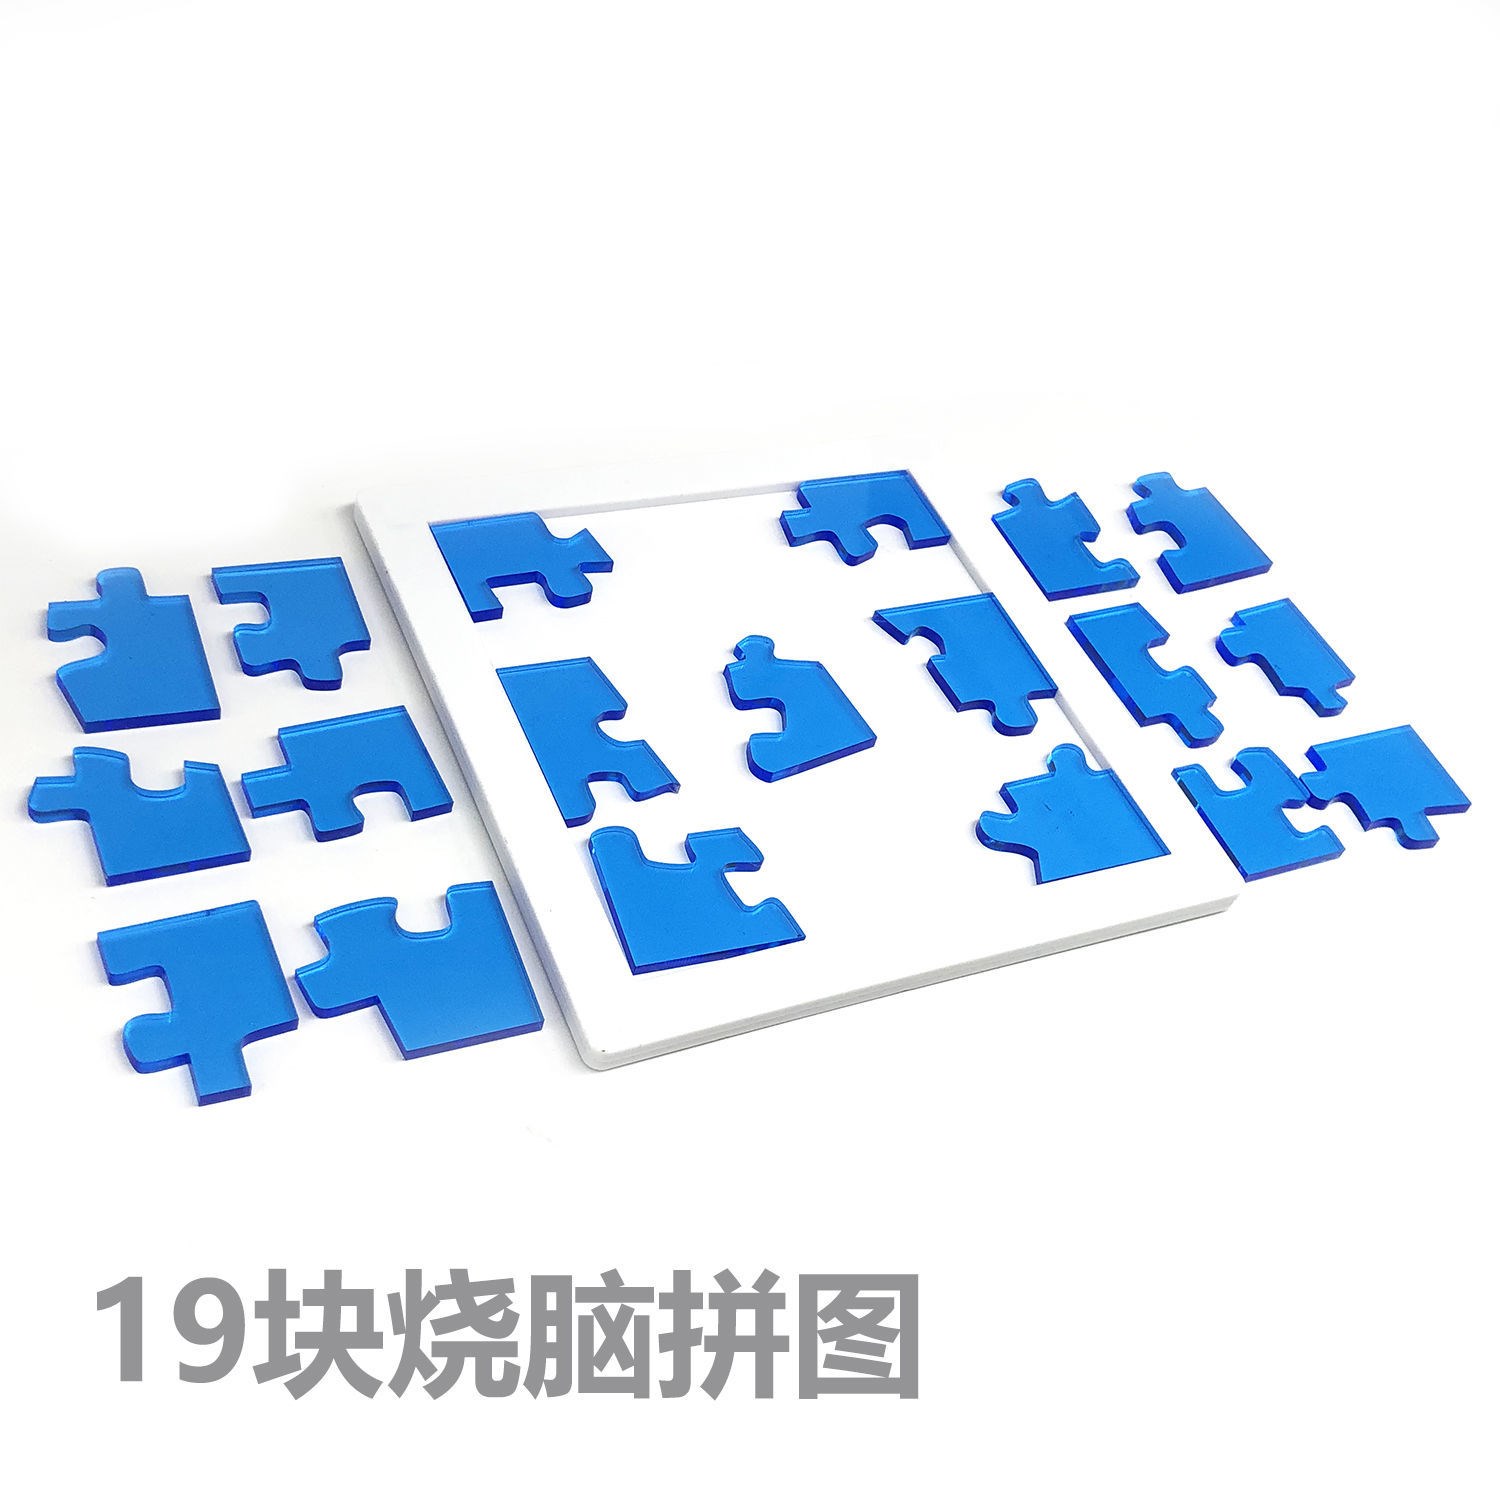 jigsawpuzzle拼图解法图片